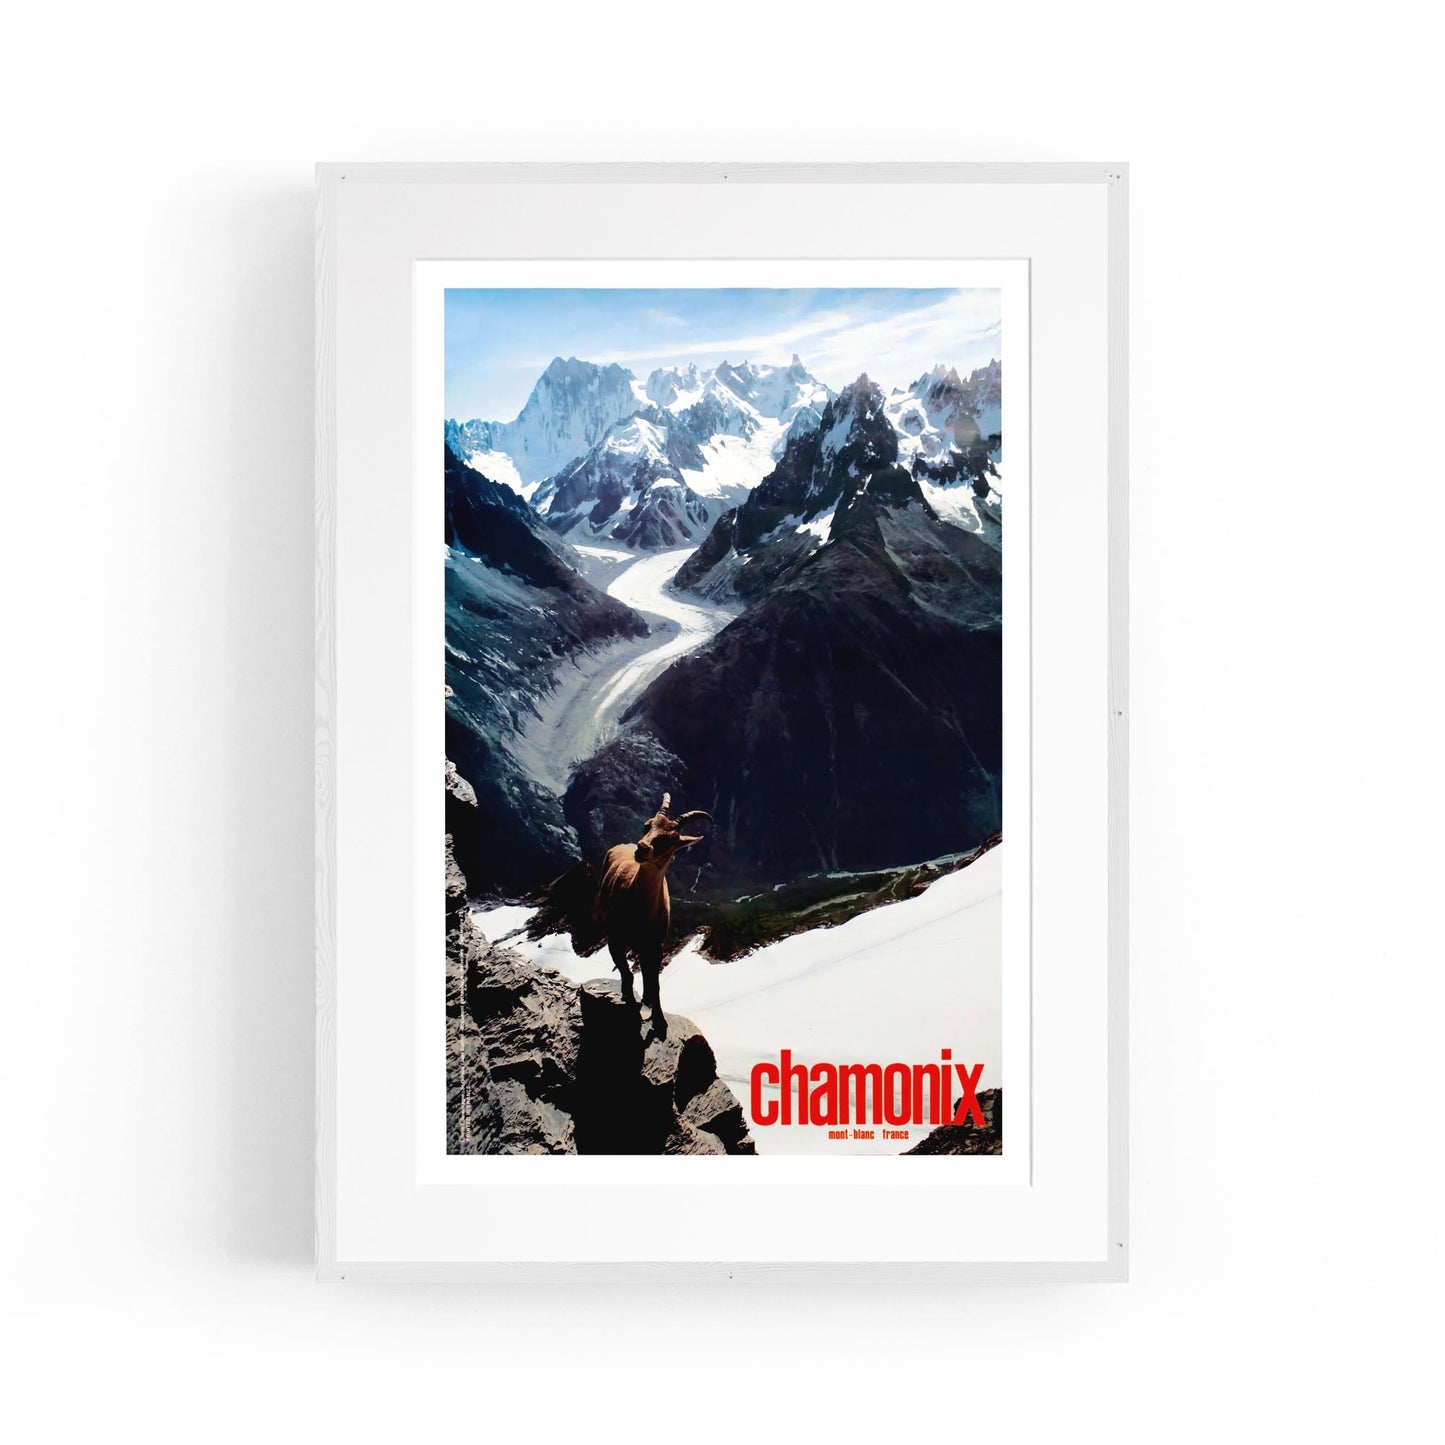 Chamonix, France - Majestic Mountain Range and Glacier | Framed Vintage Travel Poster